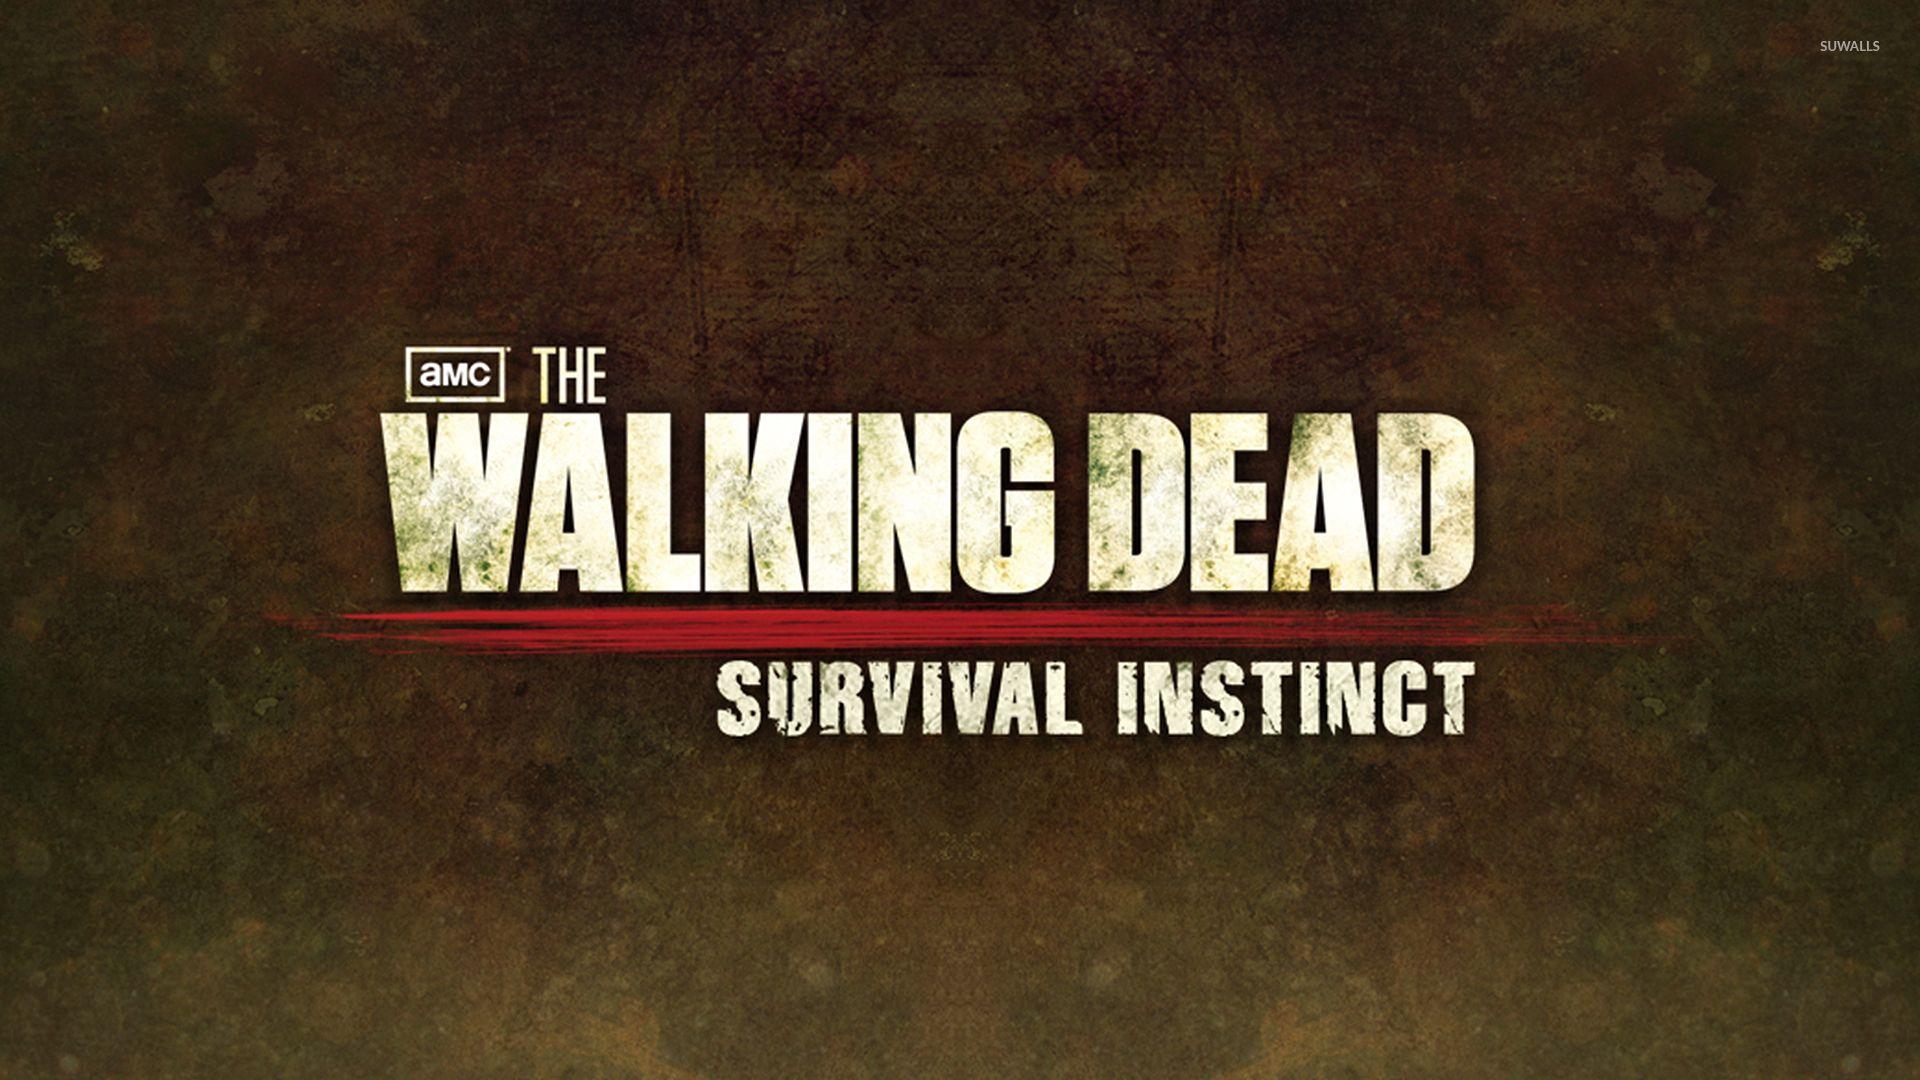 The Walking Dead: Survival Instinct wallpaper Show wallpaper